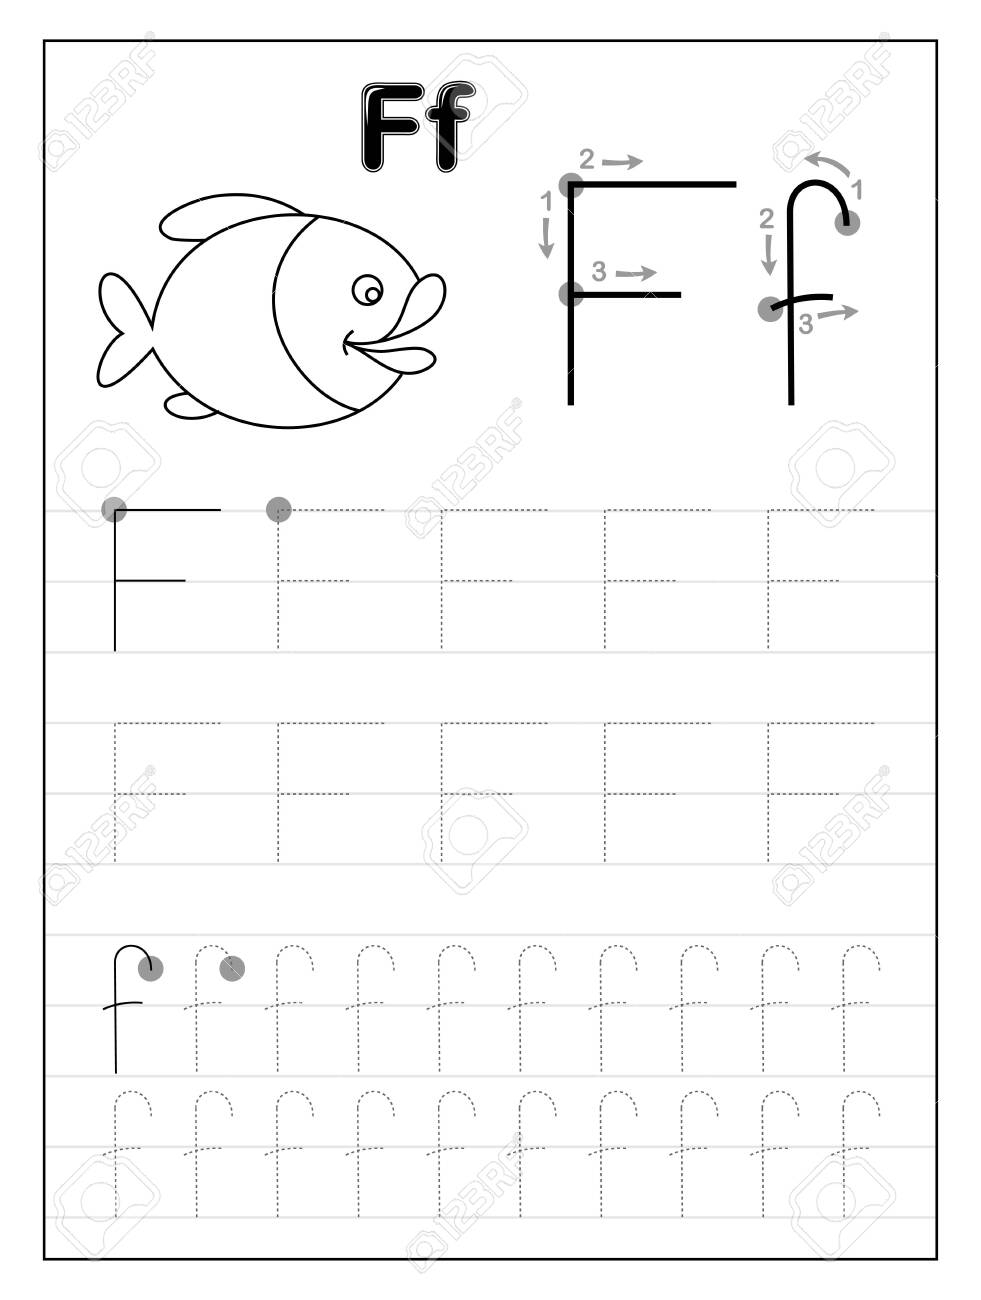 Worksheet ~ Tracing Alphabet Letter Black And White